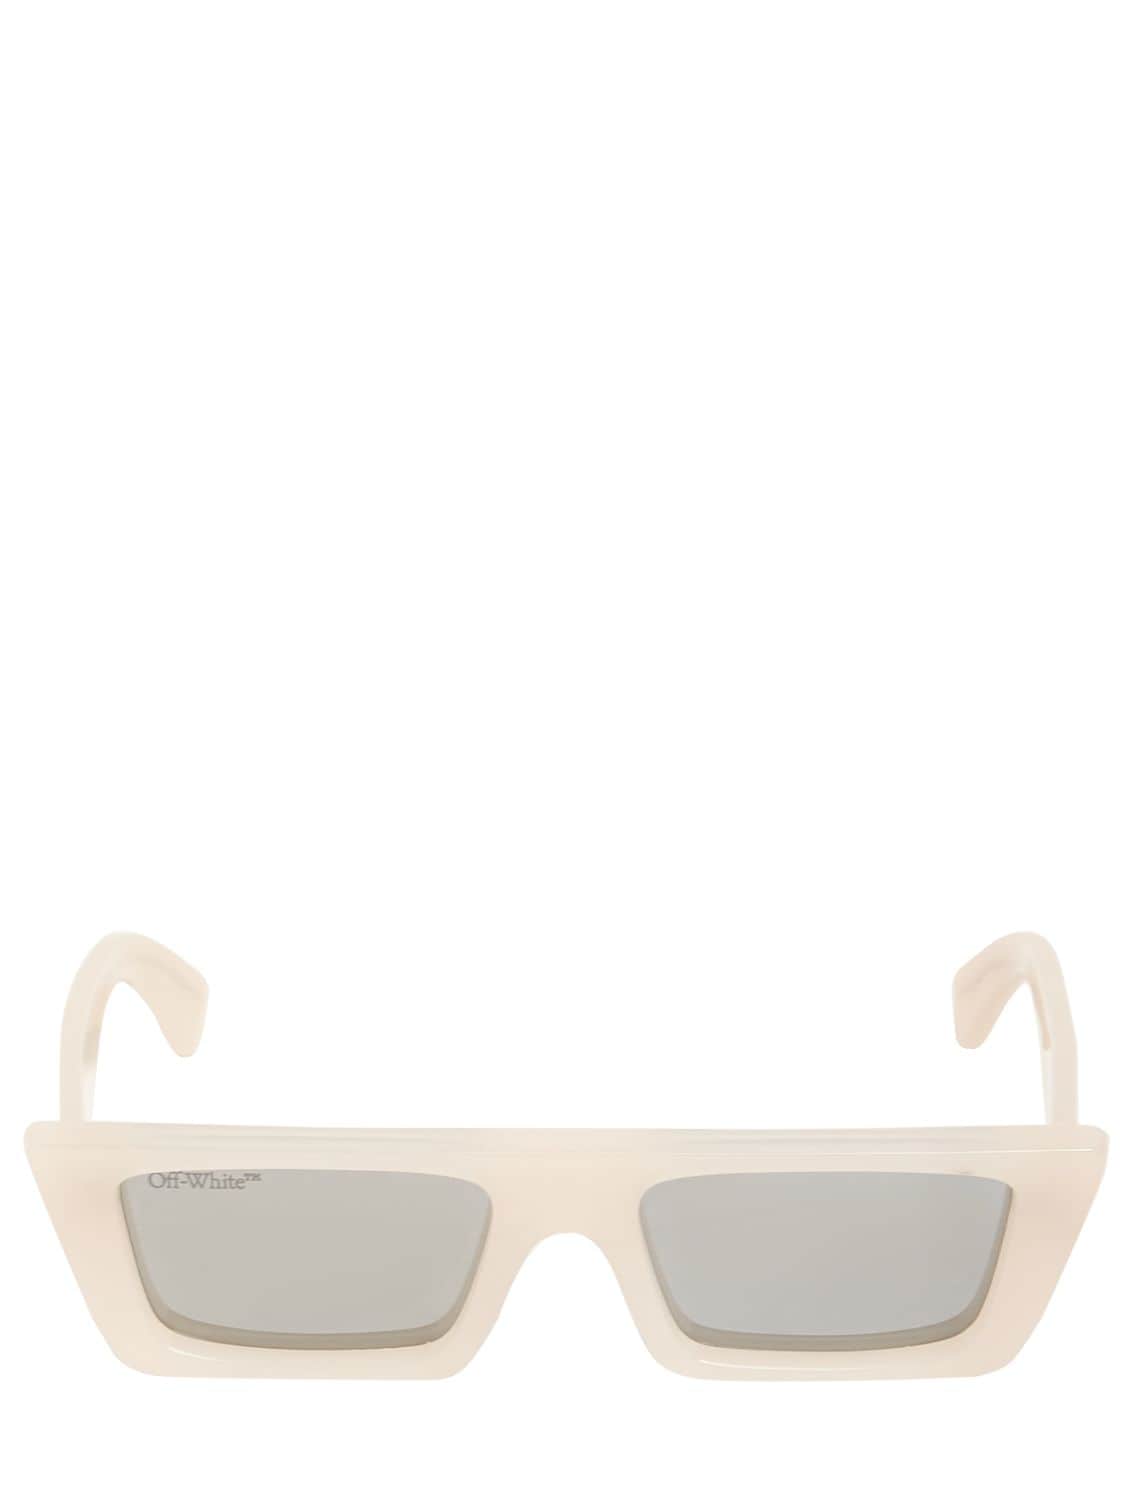 Off-white Manchester Squared Acetate Sunglasses